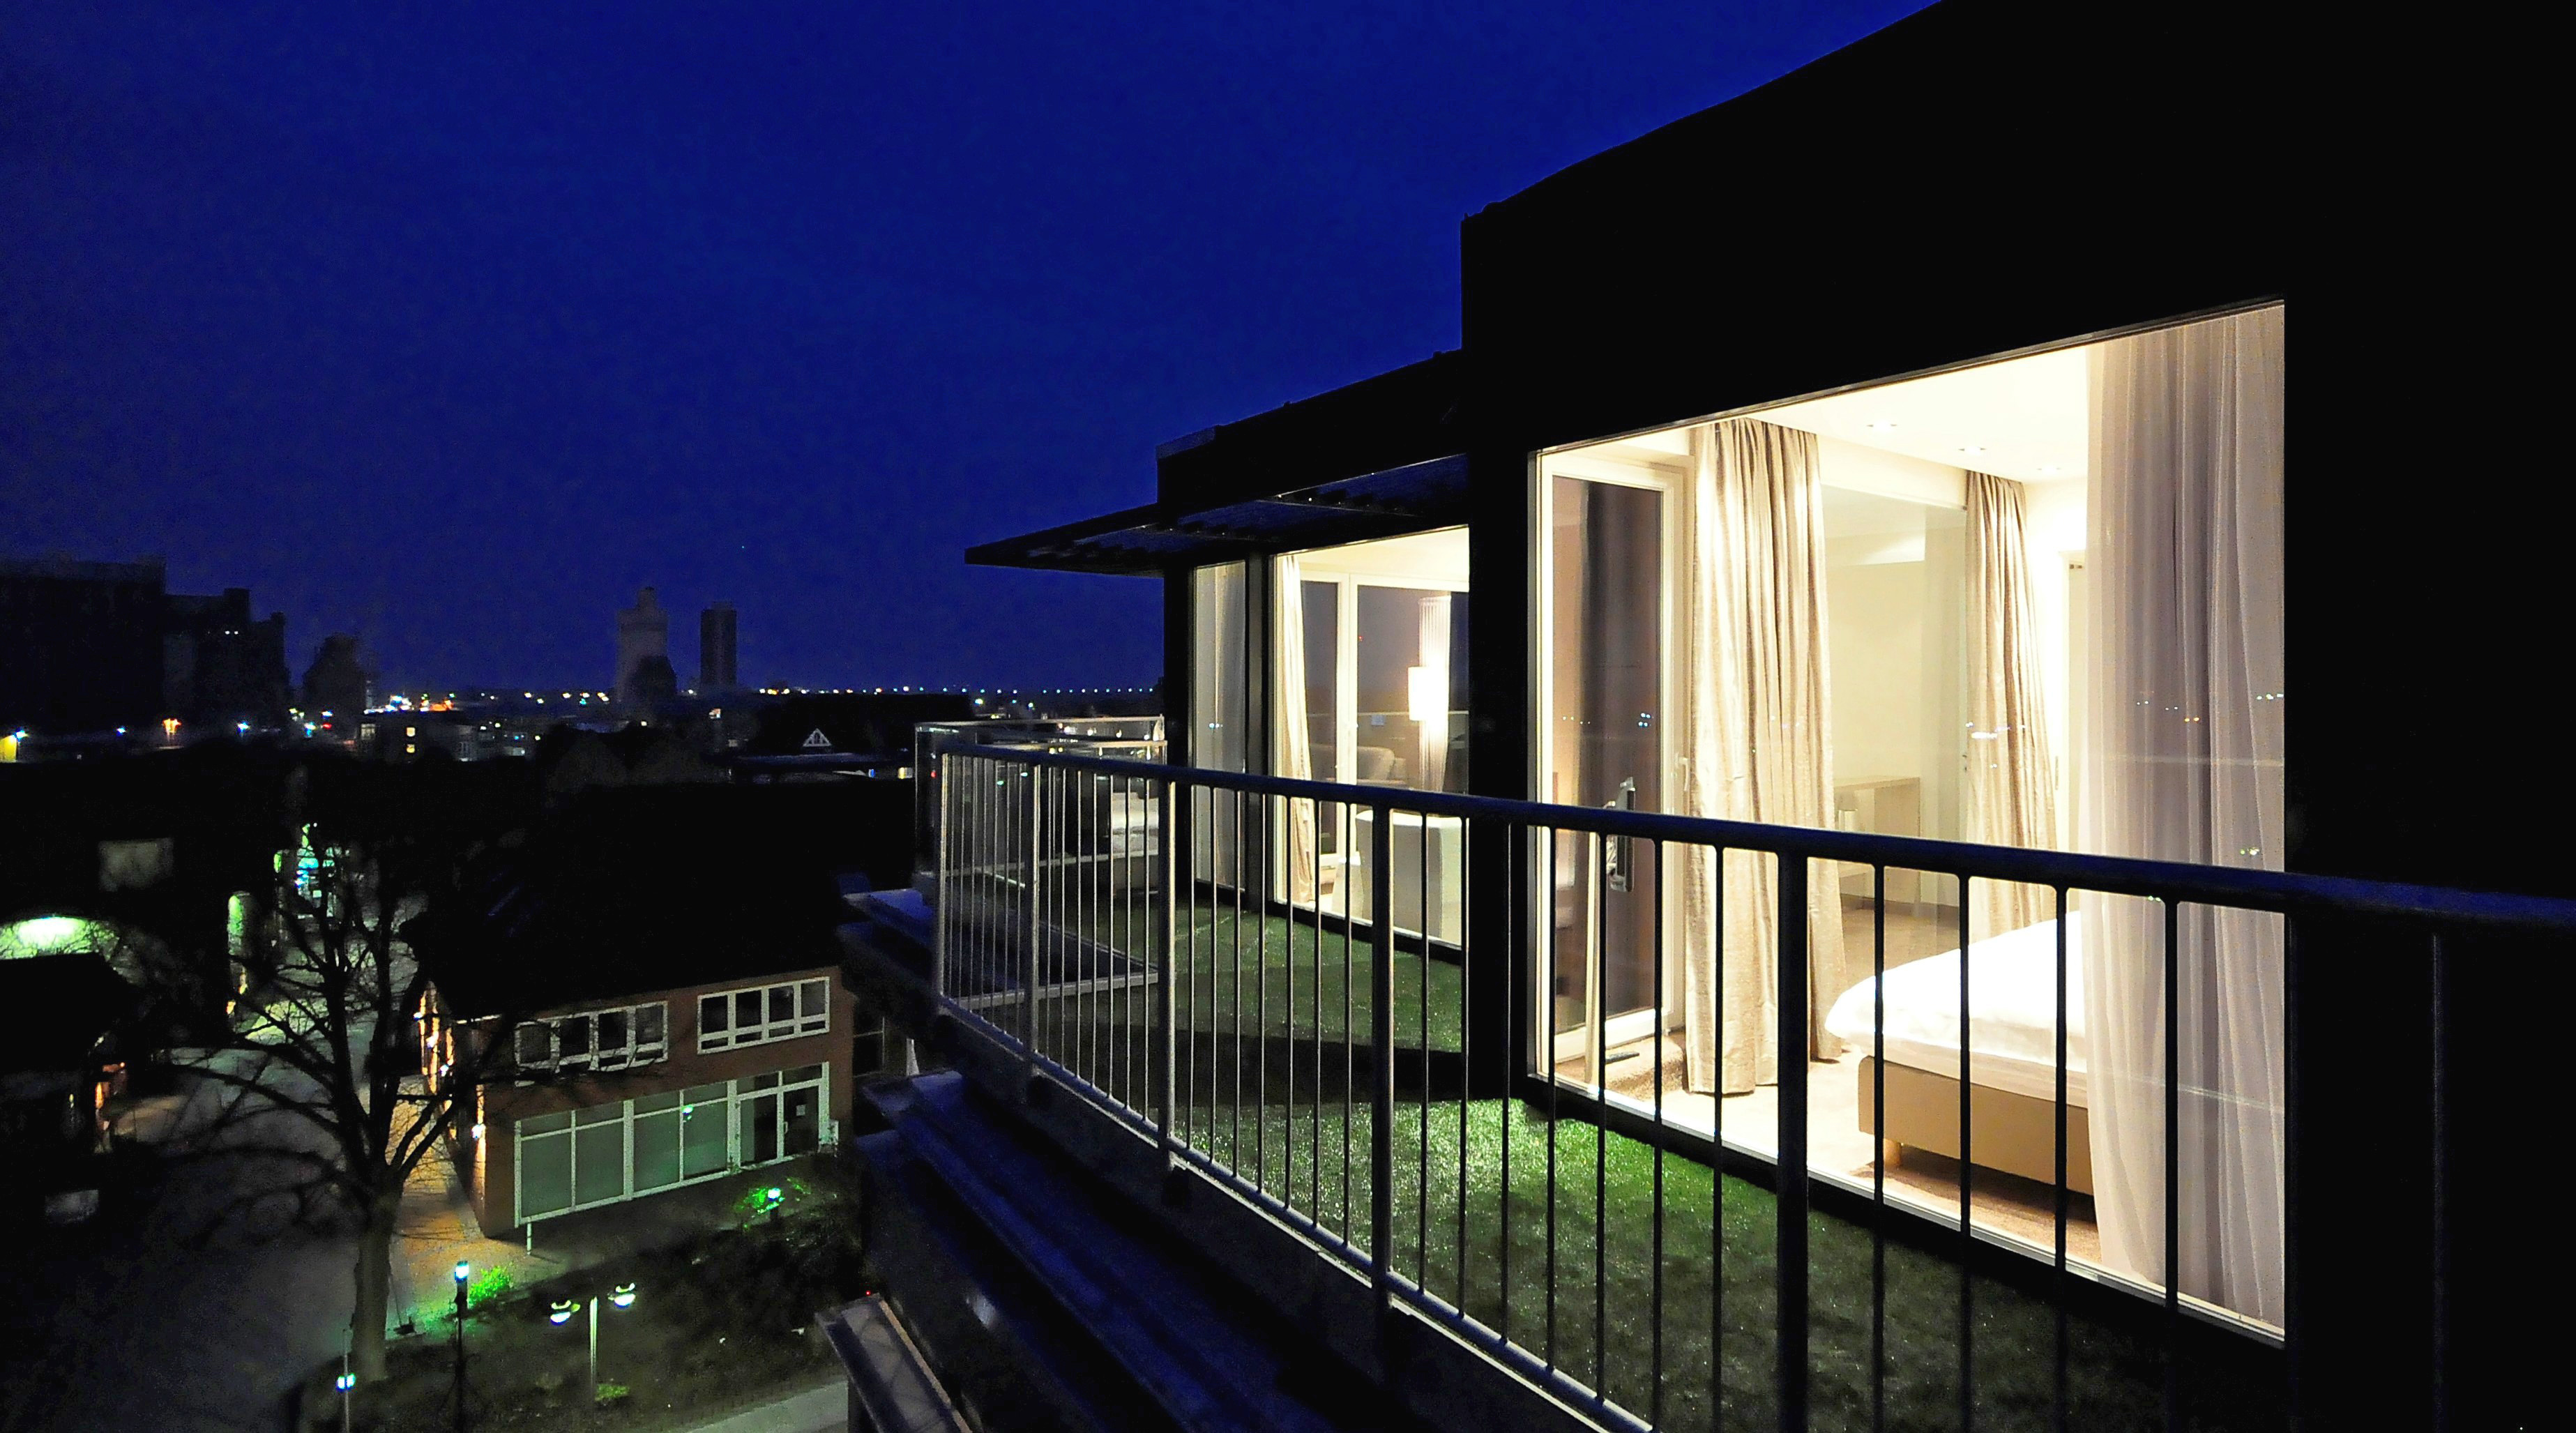 Panoramablick auf Husum vom THOMAS Hotel Spa Lifestyle aus.
